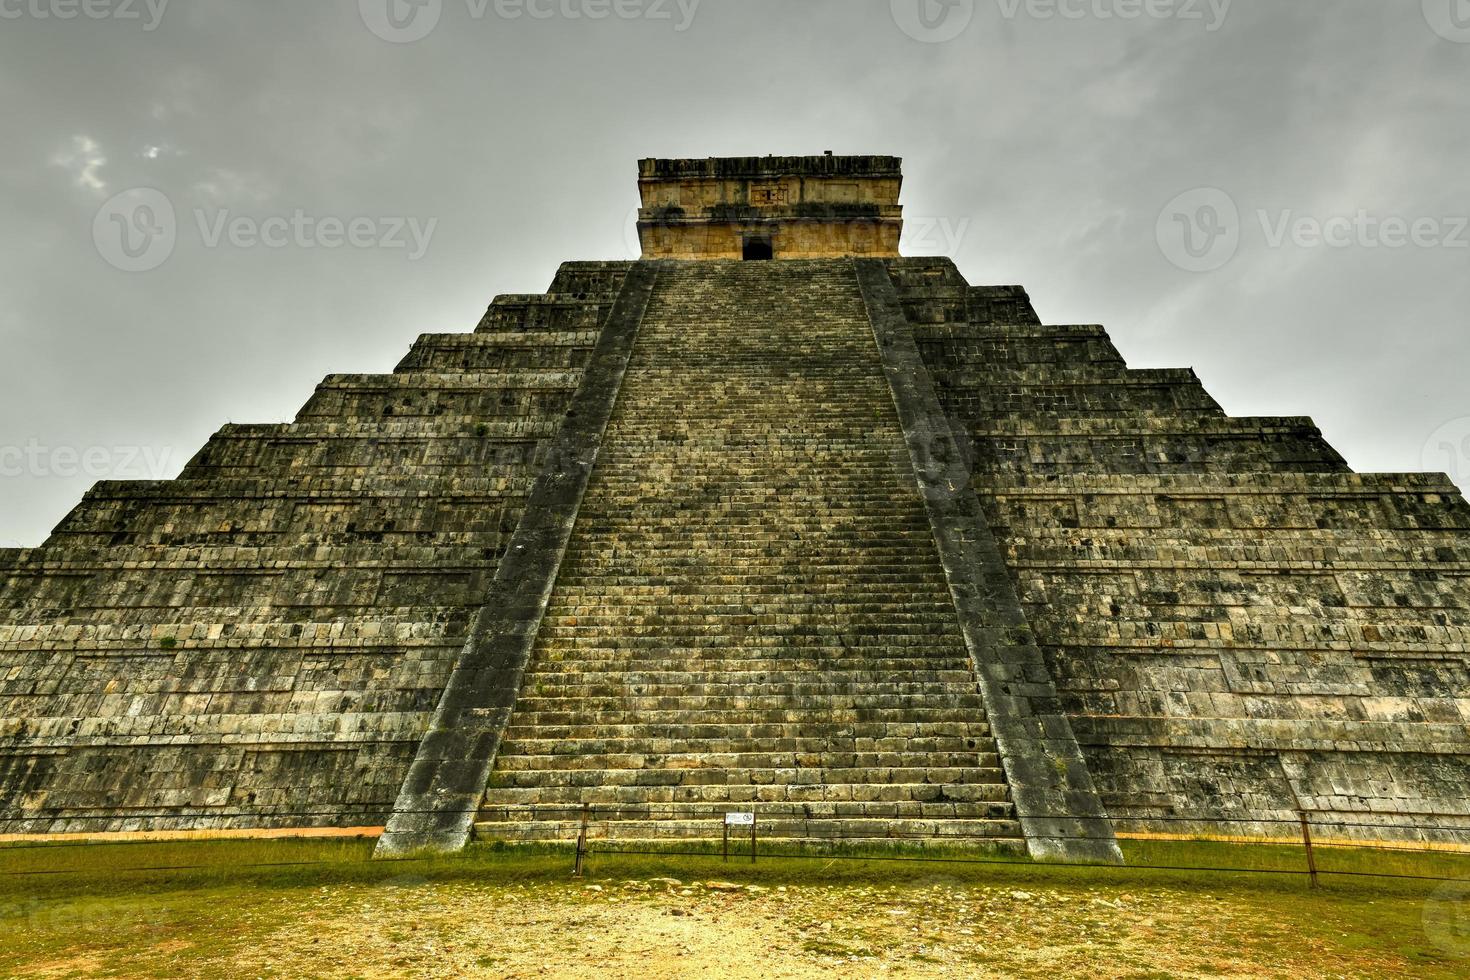 Pyramid of Kukulkan at Chichen Itza, the ancient Maya city in the Yucatan region of Mexico. photo